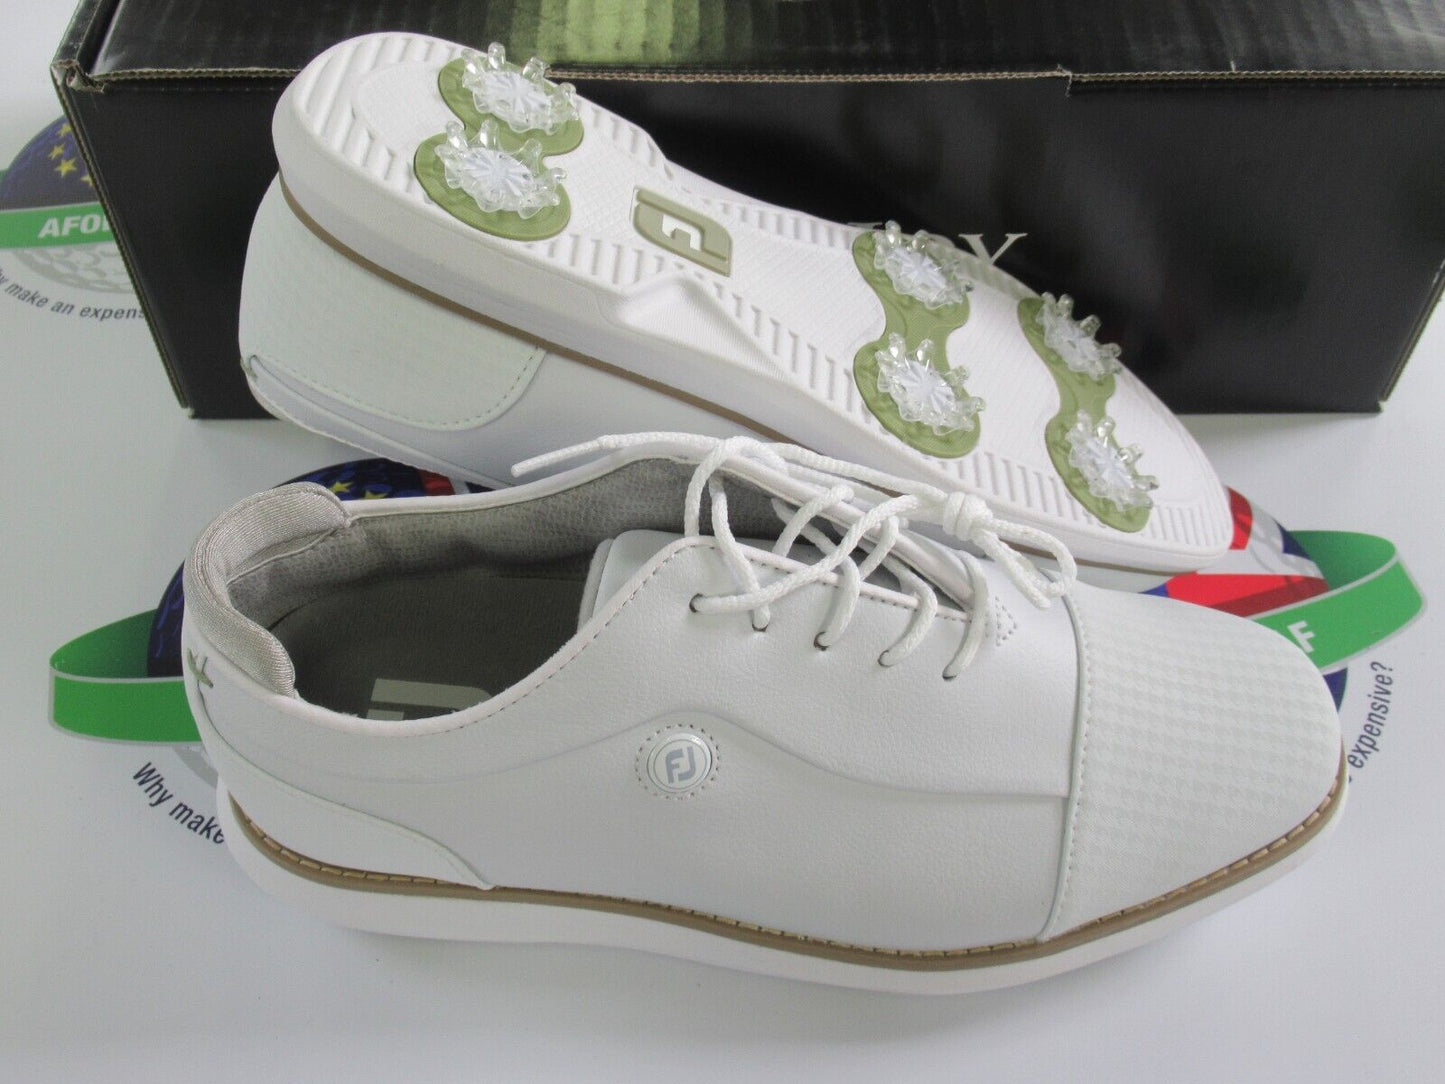 footjoy fj traditions womens golf shoes 97914k white uk size 4 medium